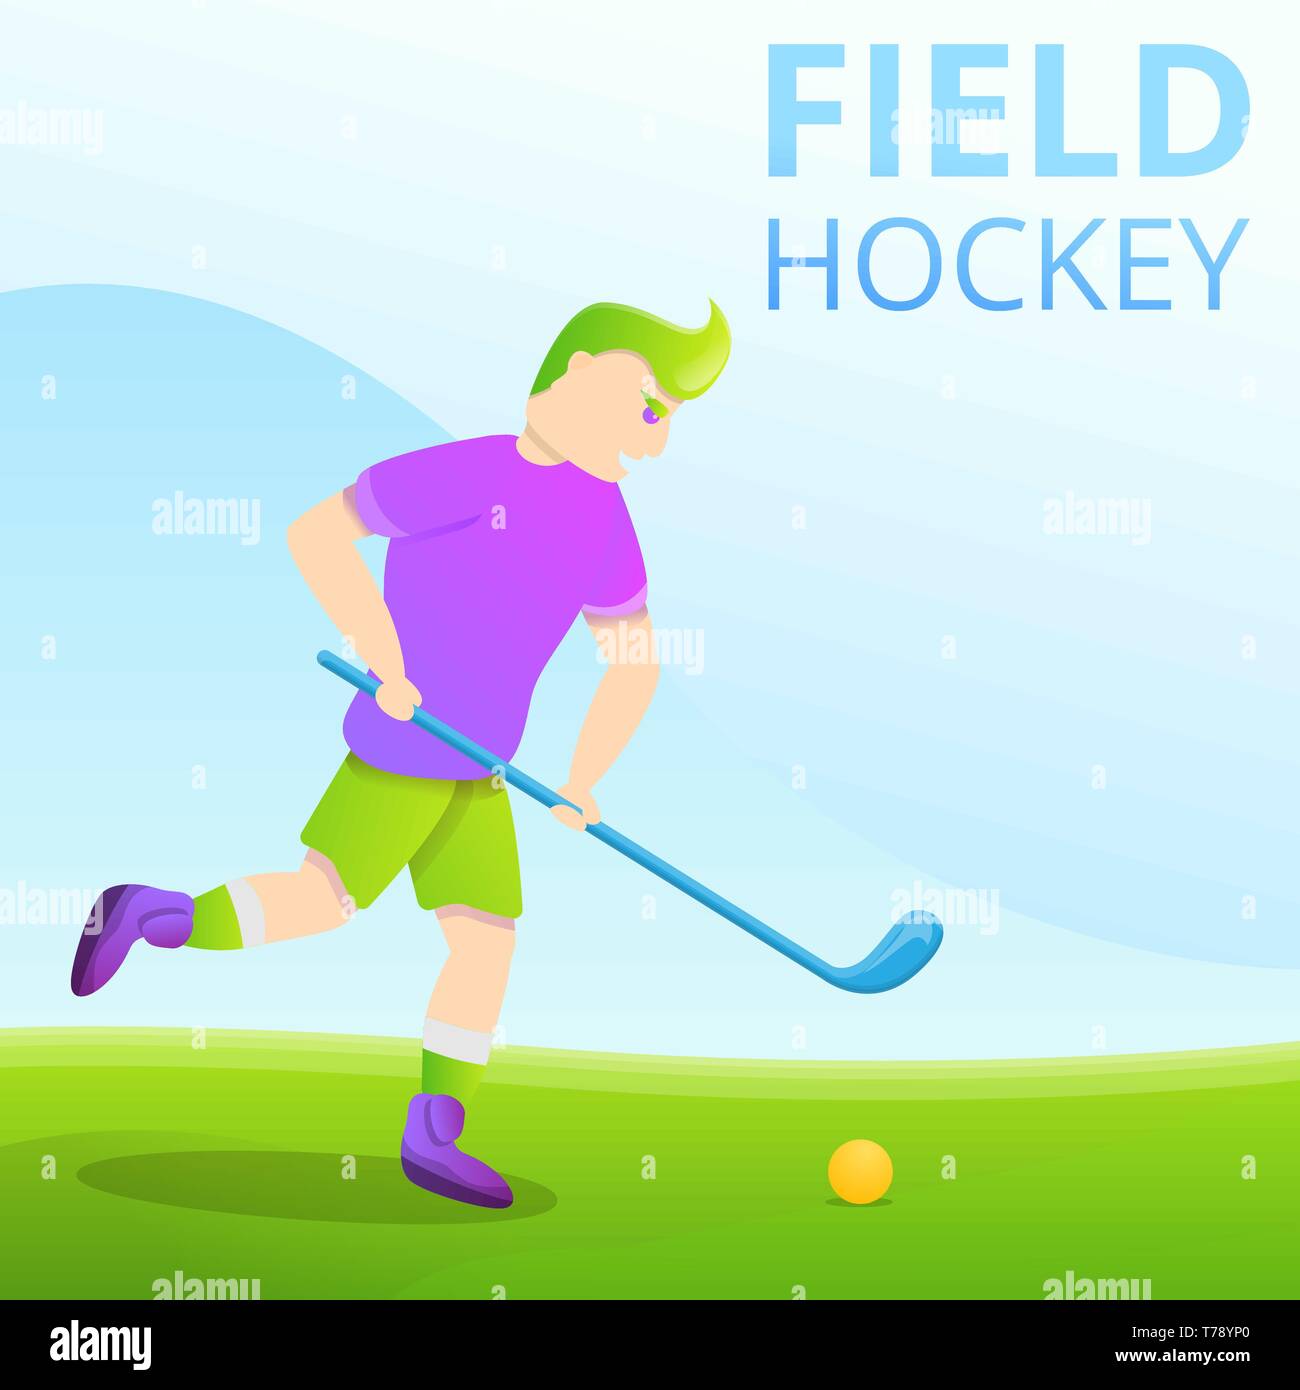 Field field hockey Stock Vector Images - Alamy